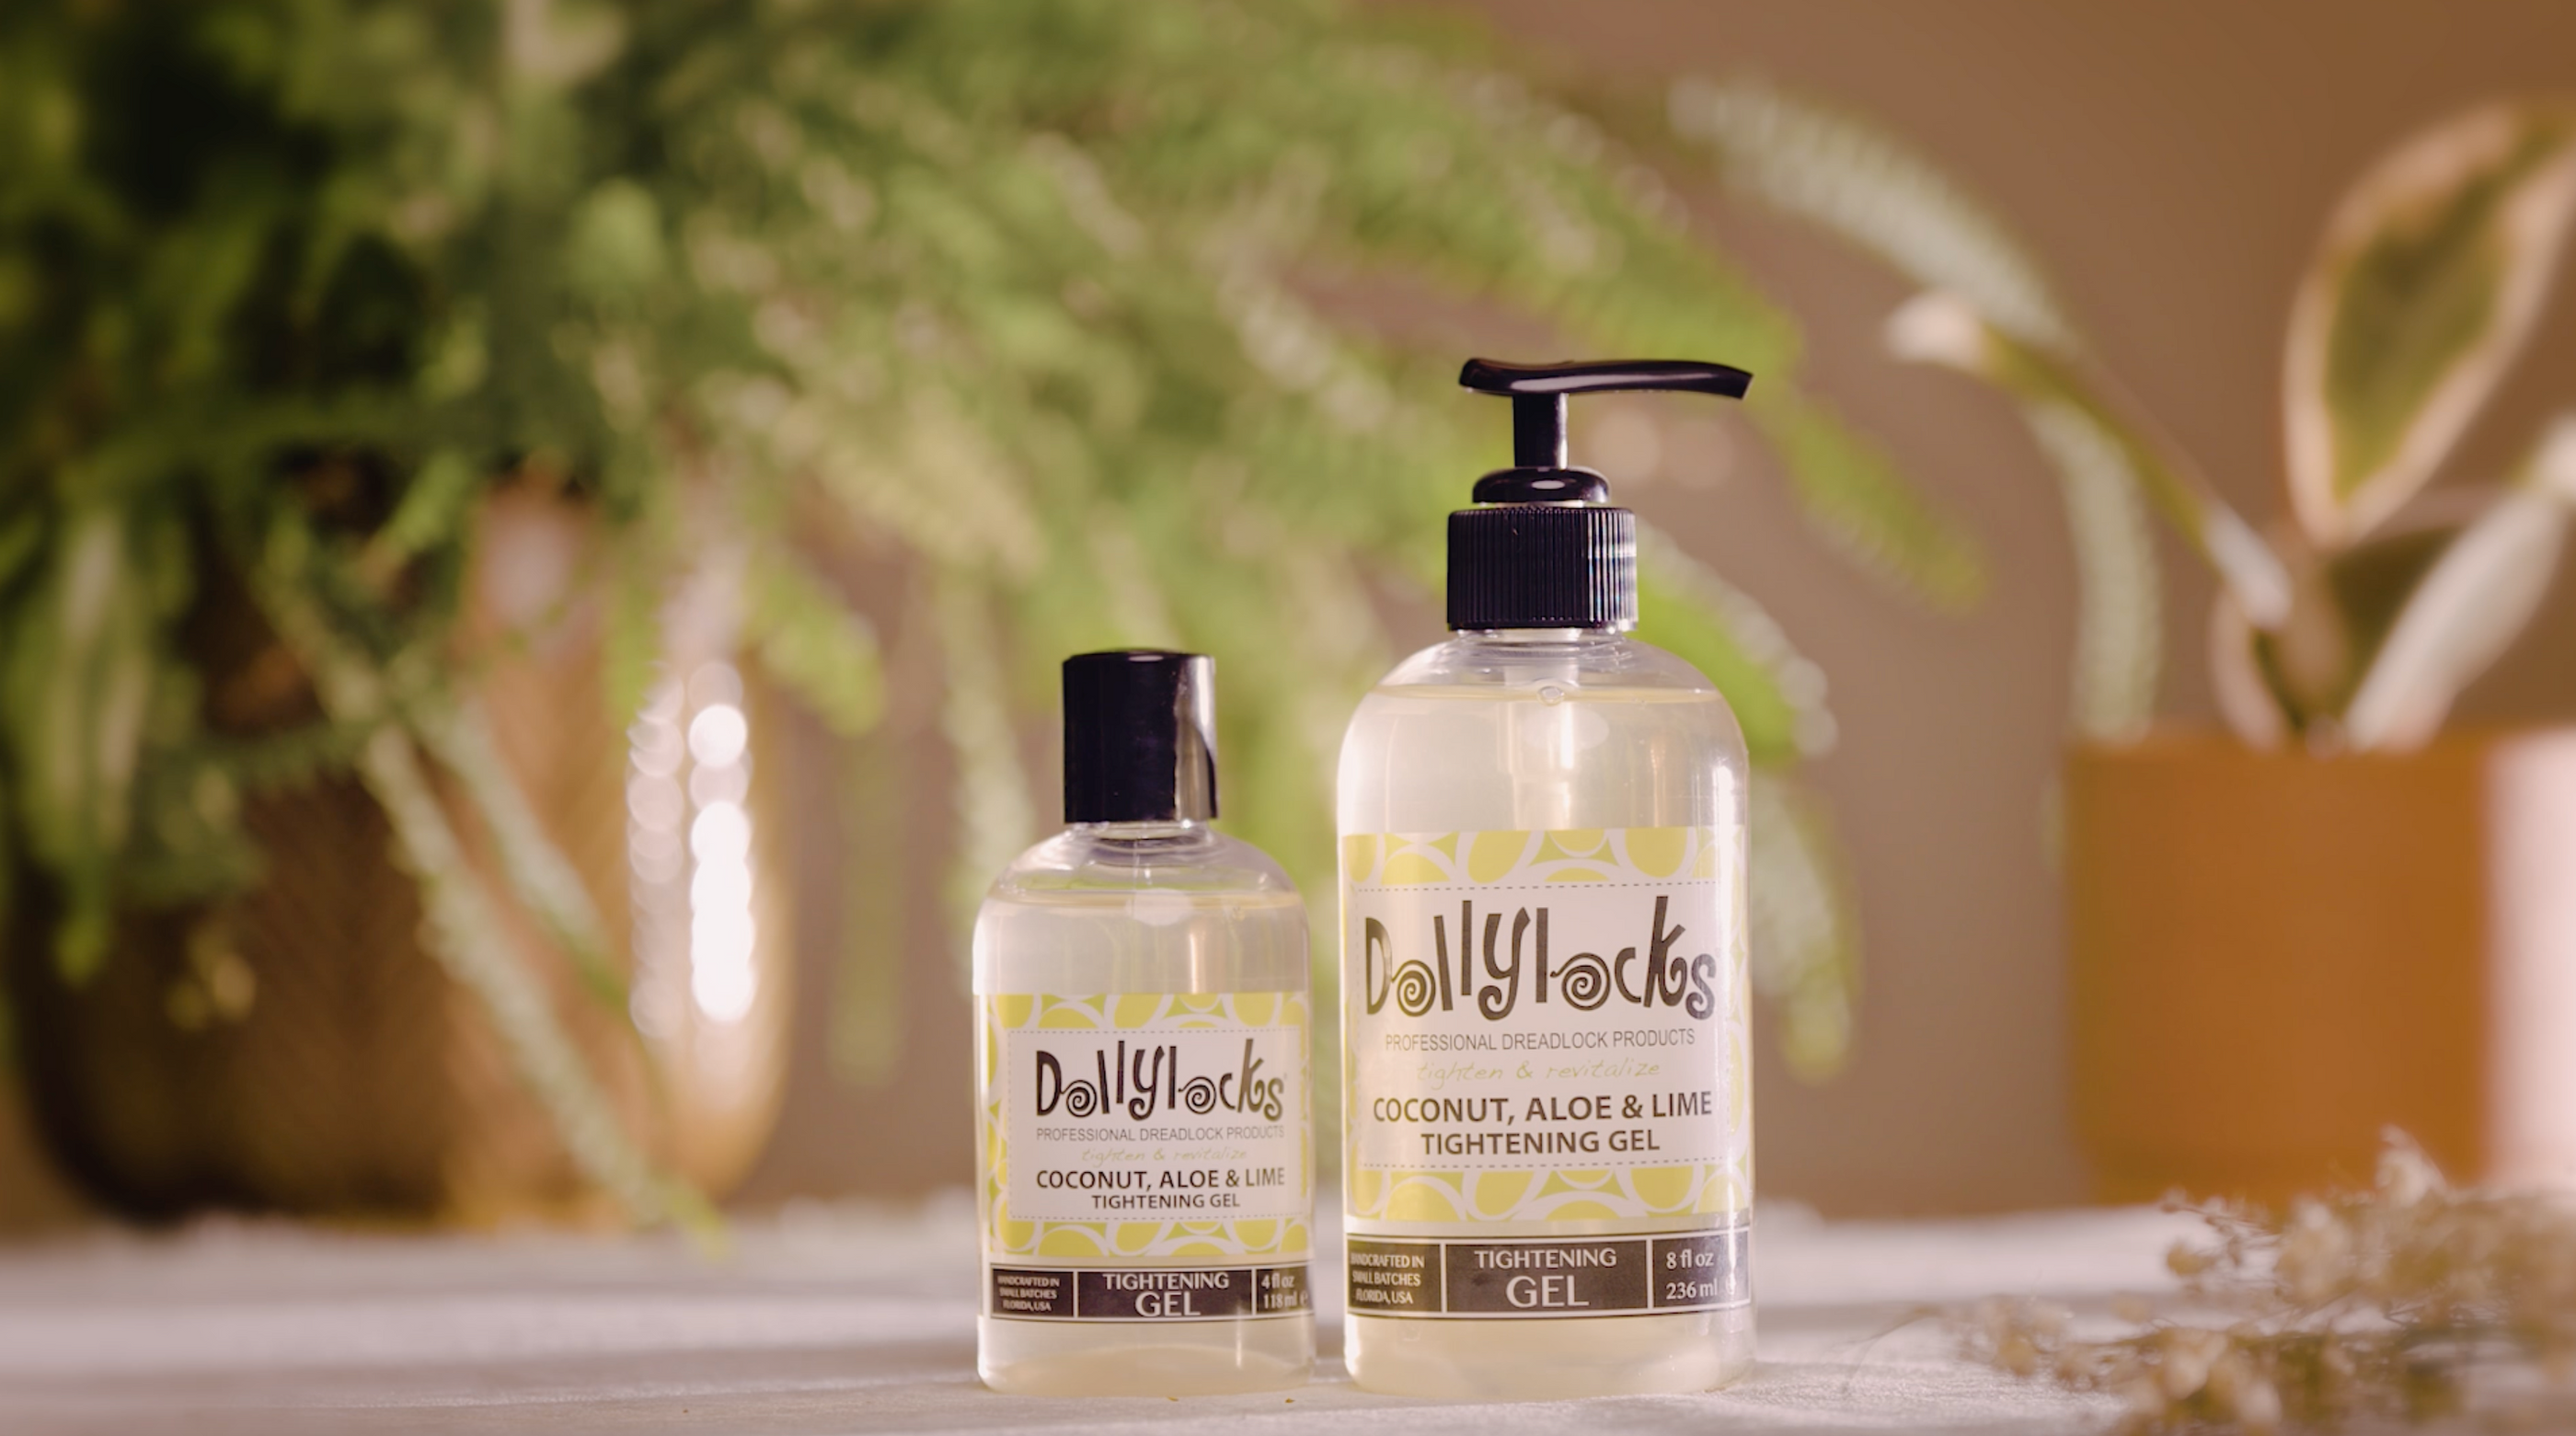 Dollylocks Professional Organic Dreadlocks Products : Tightening Gel 